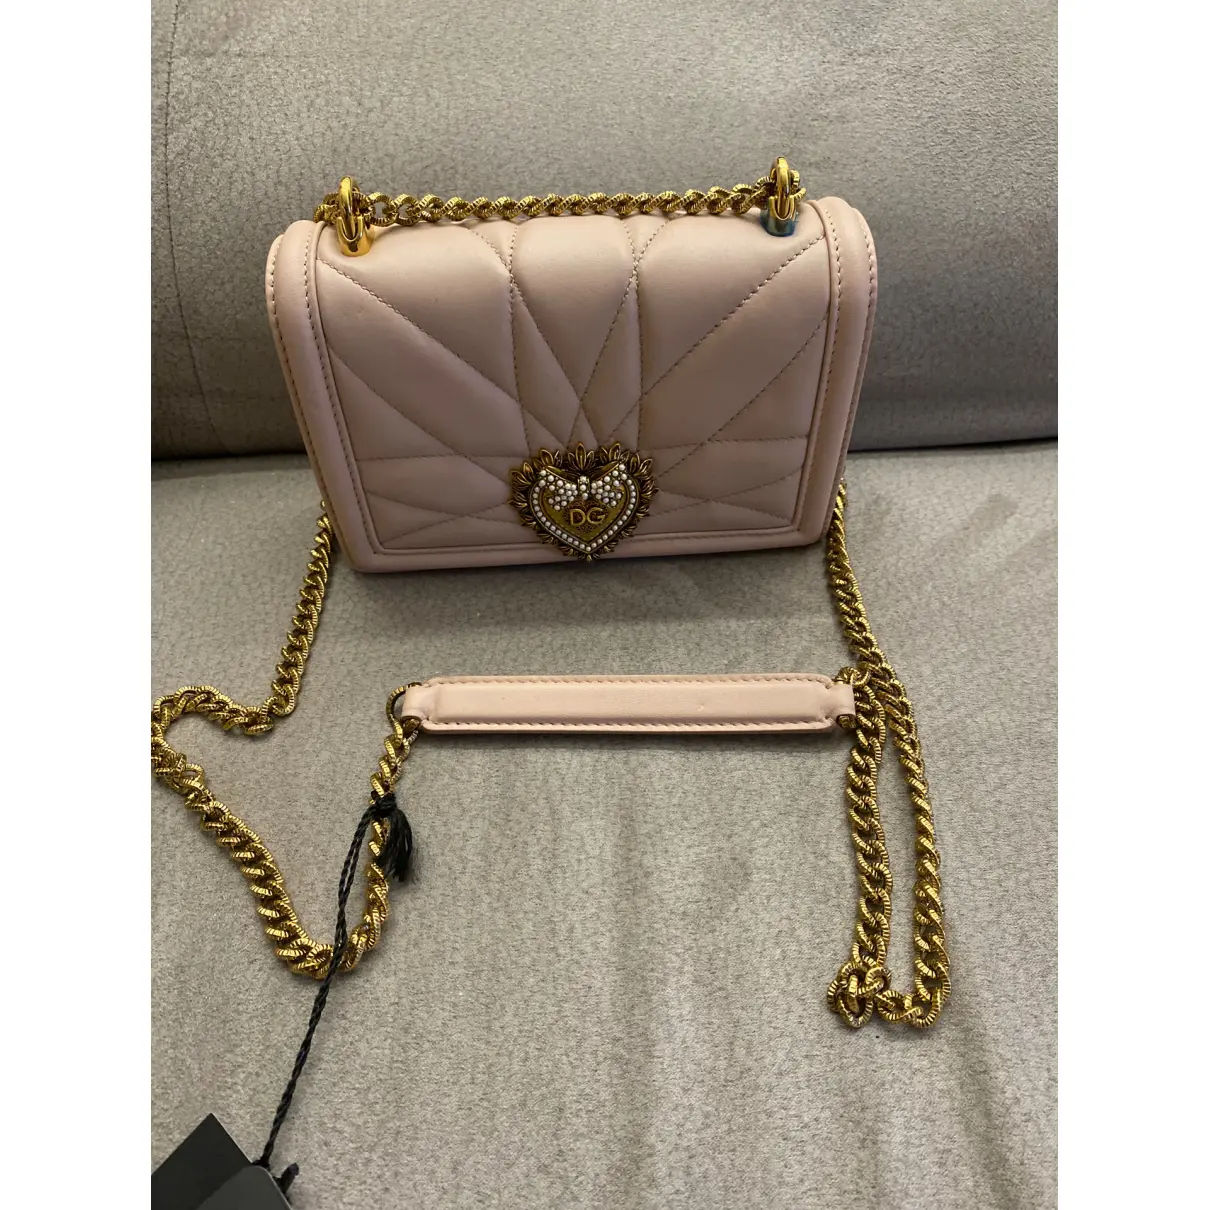 Buy Dolce & Gabbana Devotion leather handbag online